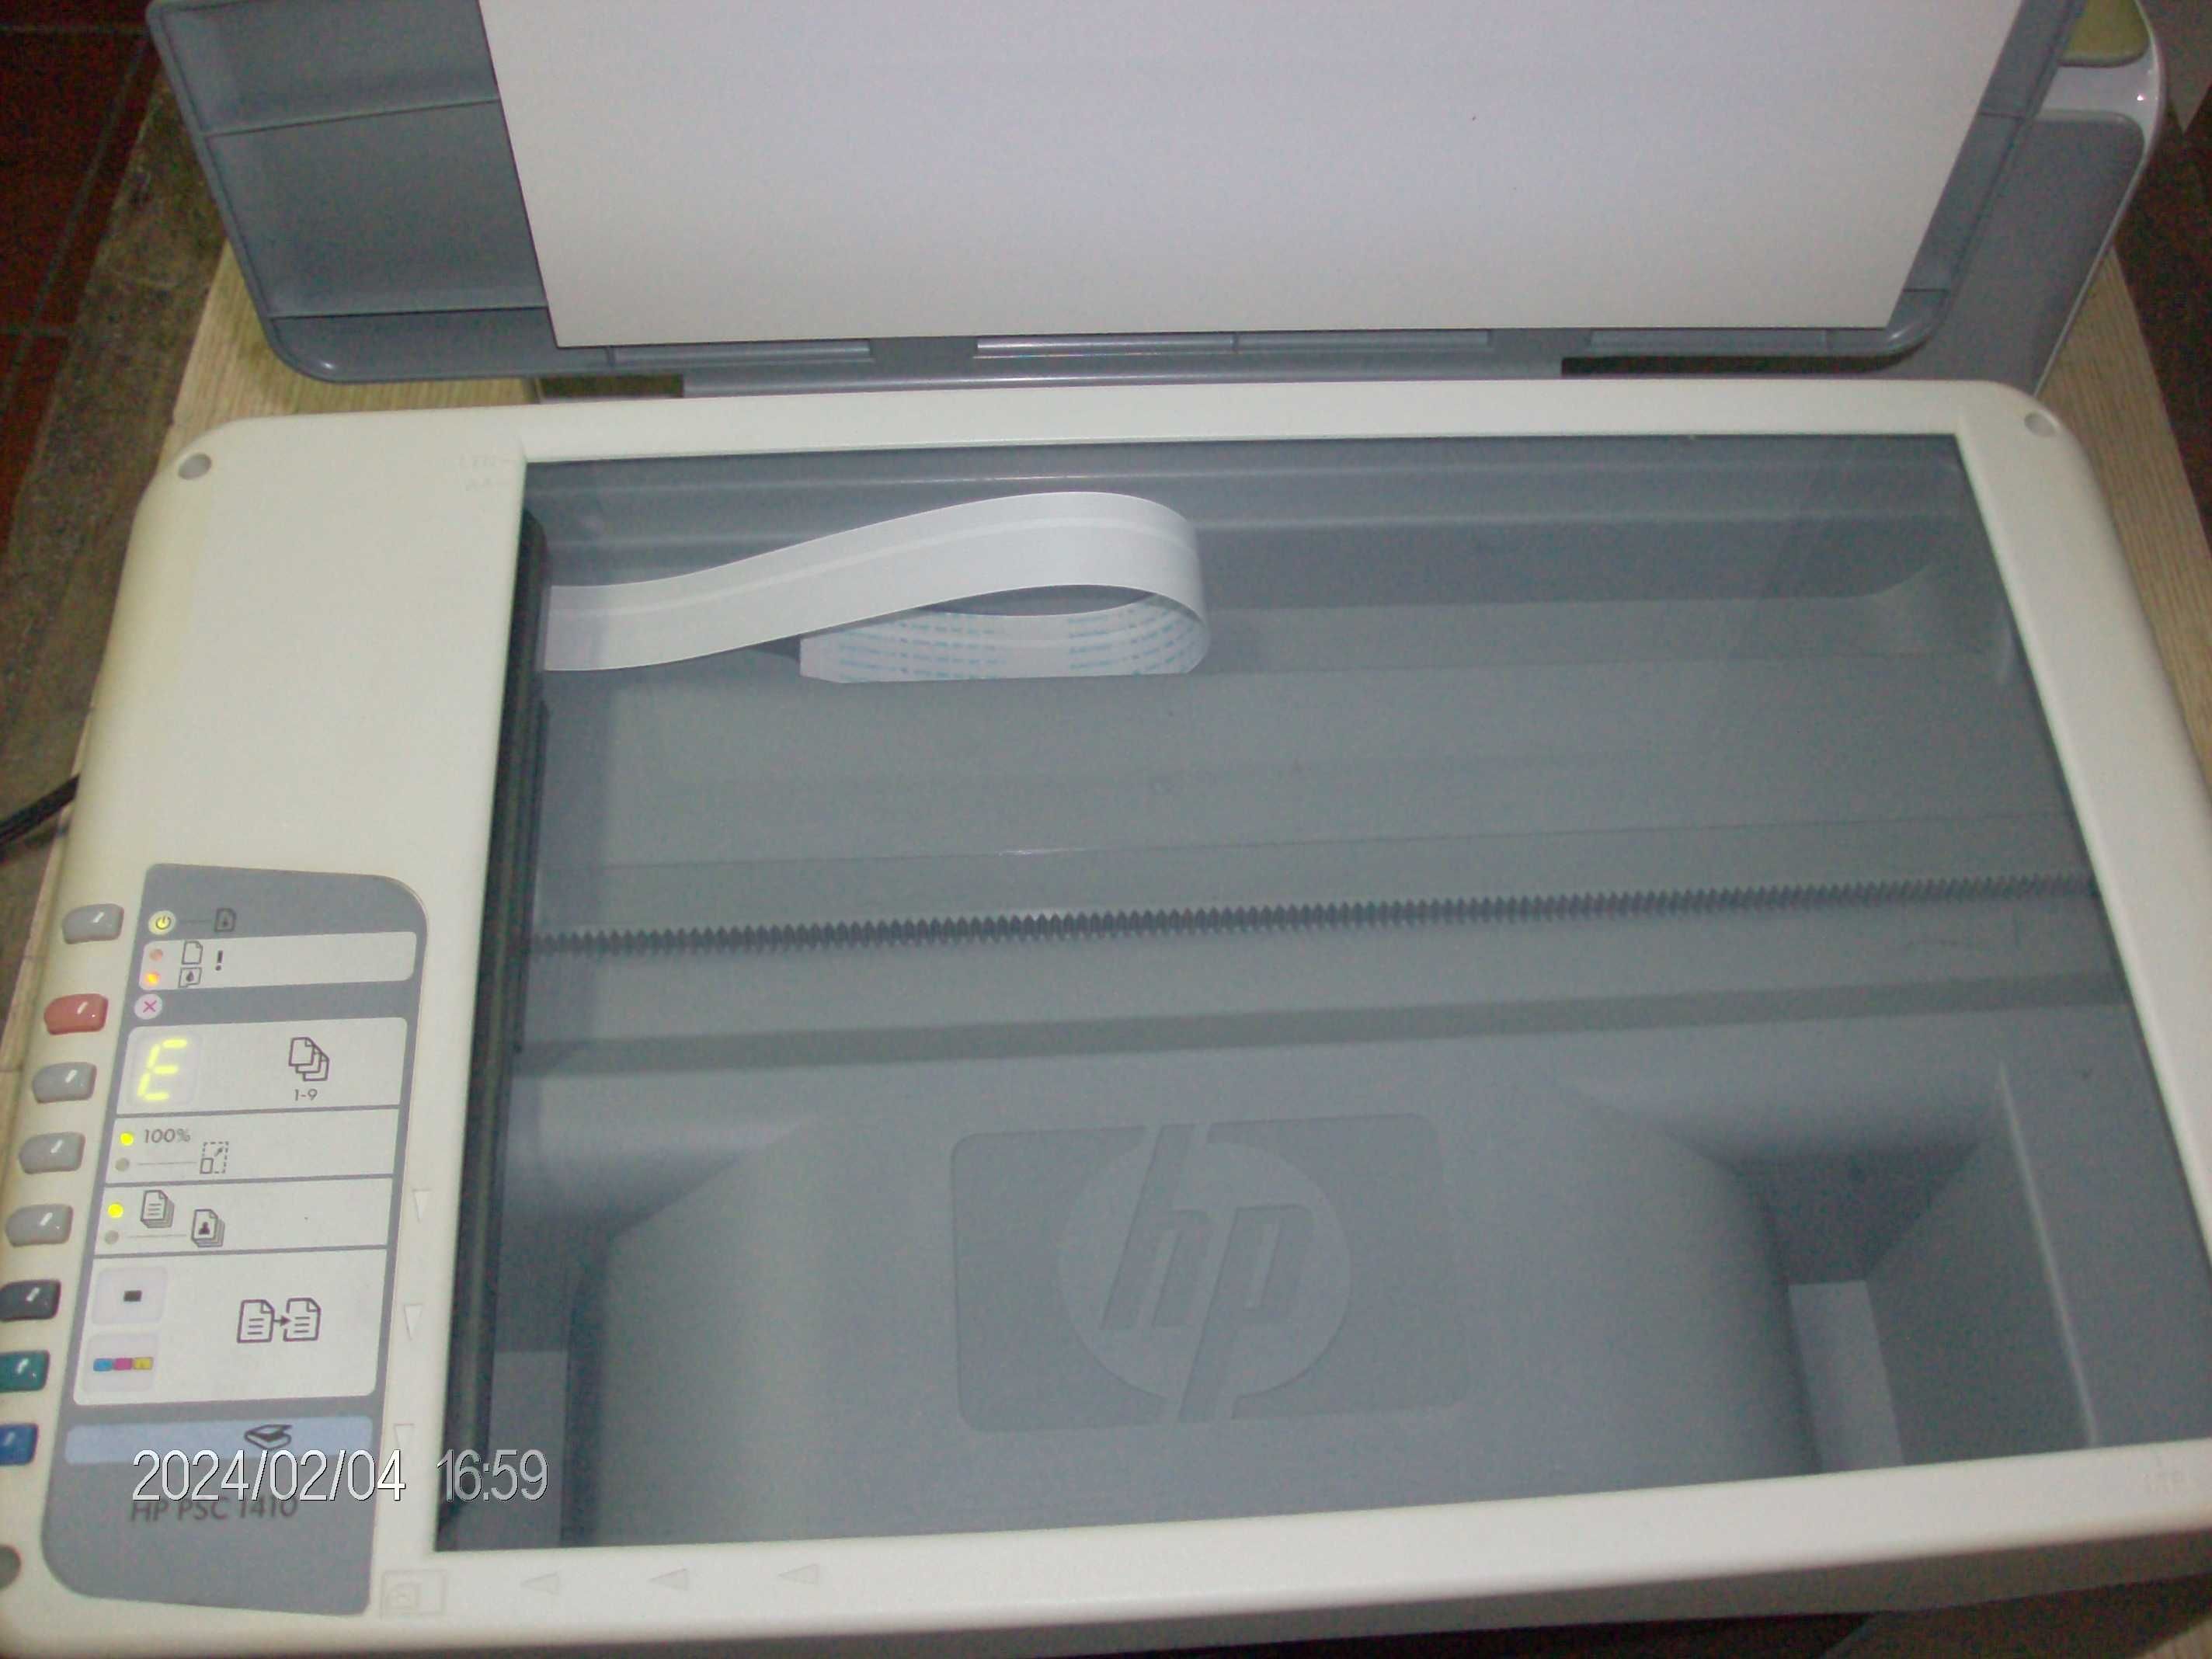 Impressora HP PSC 1410 avariada